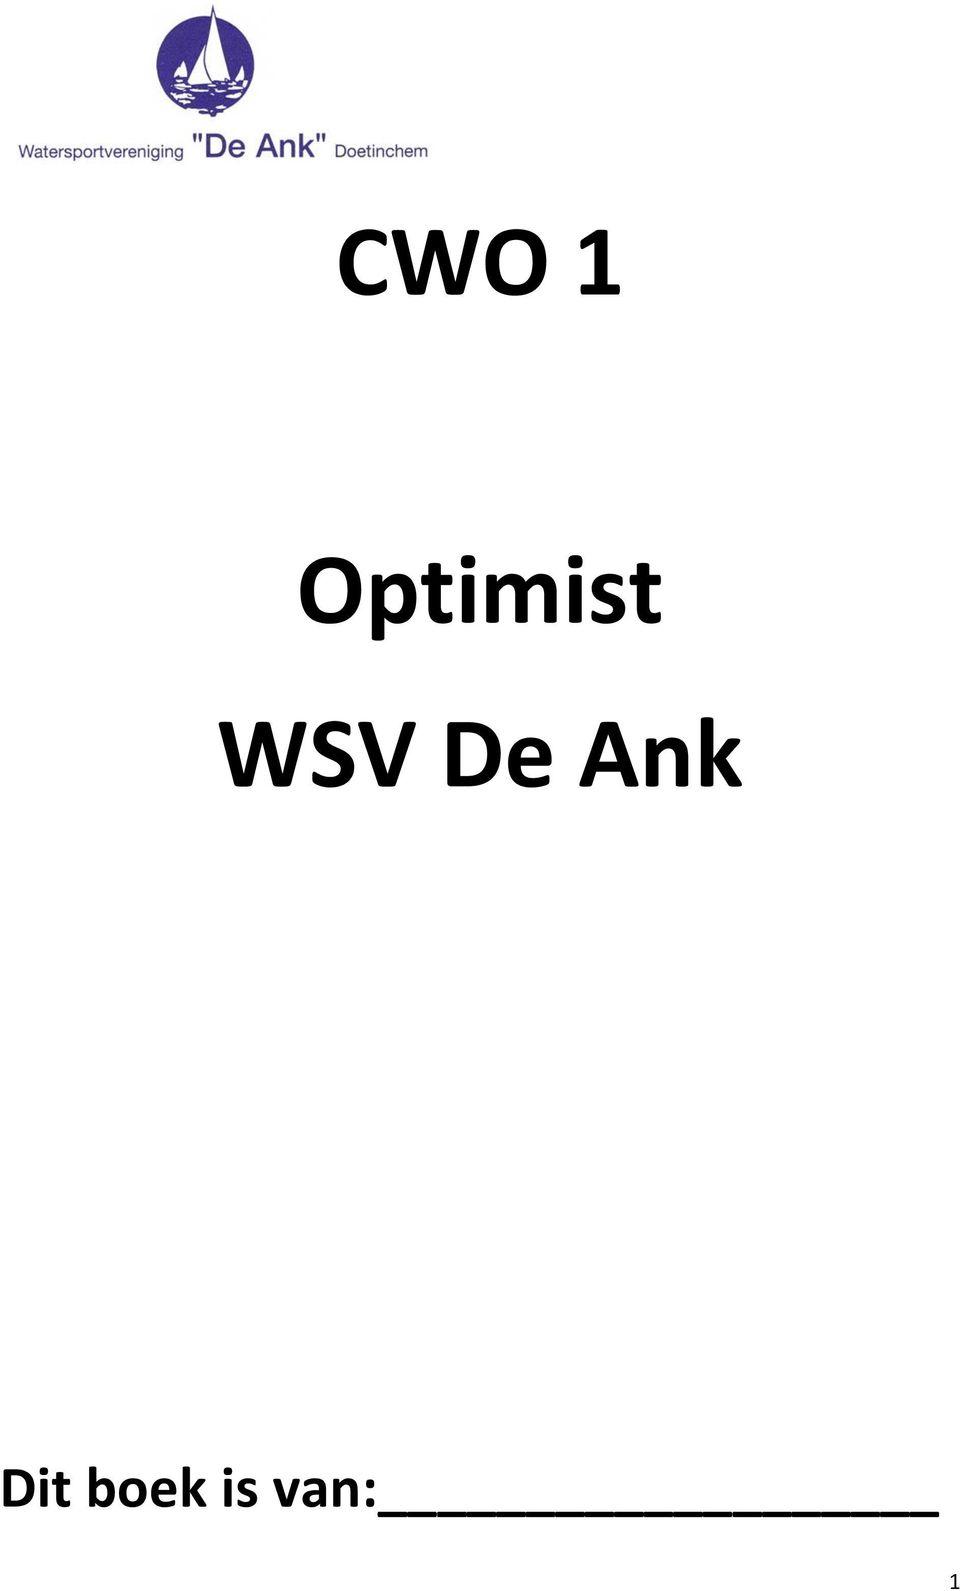 WSV De Ank